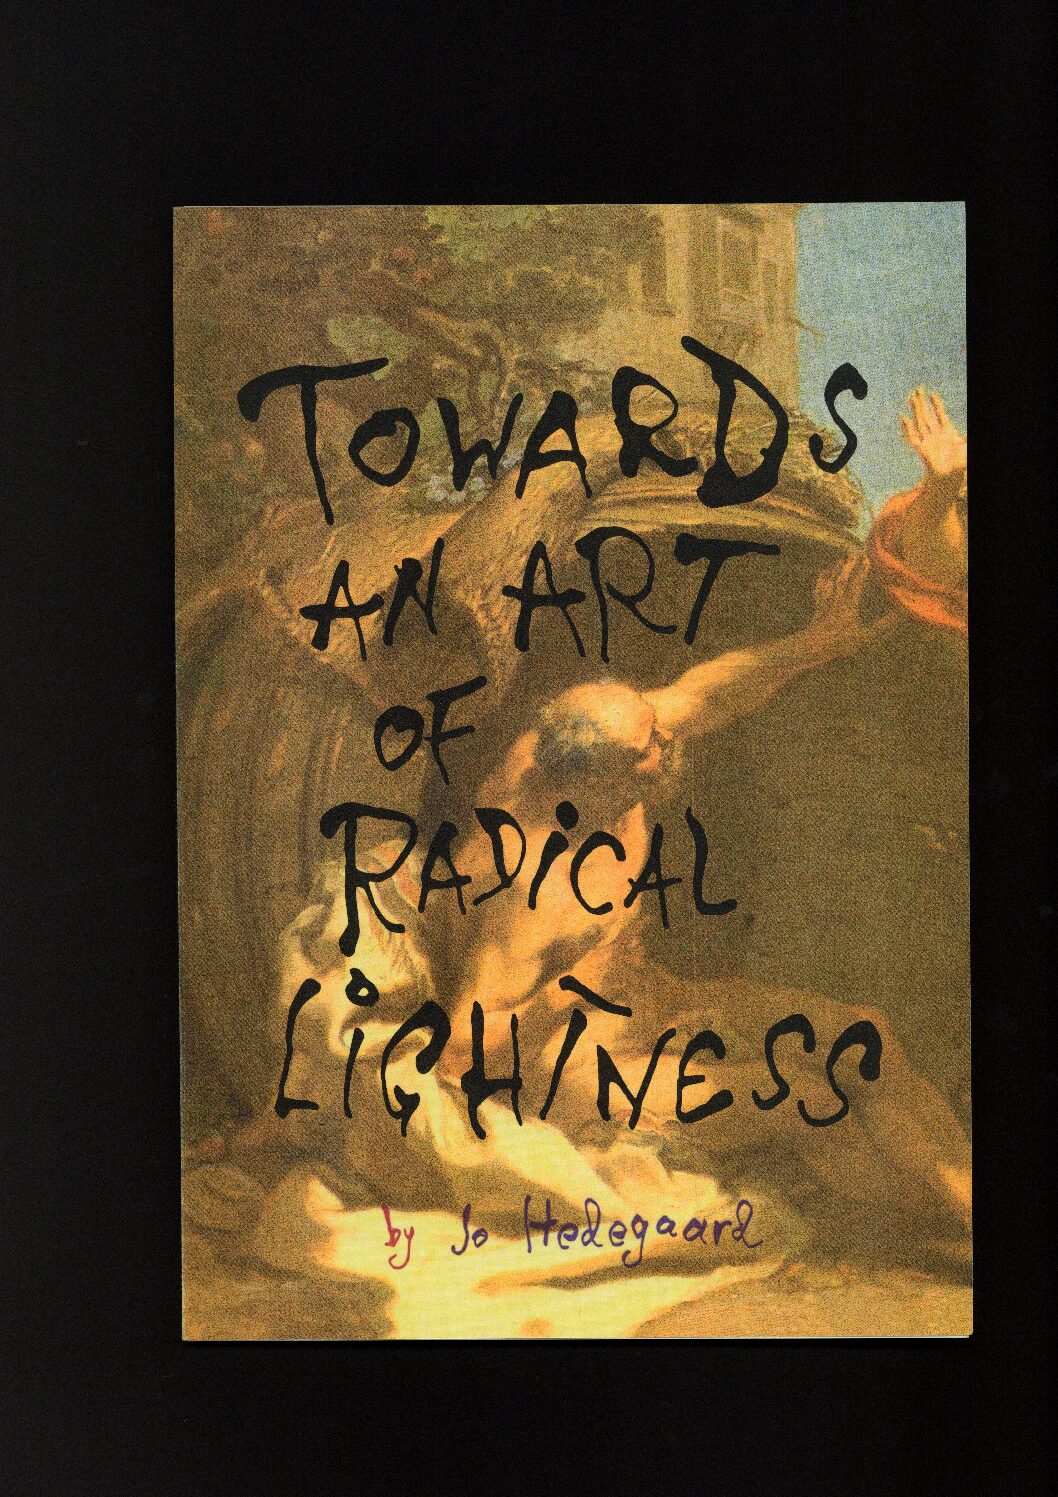 Towards an art of Radical Lightness